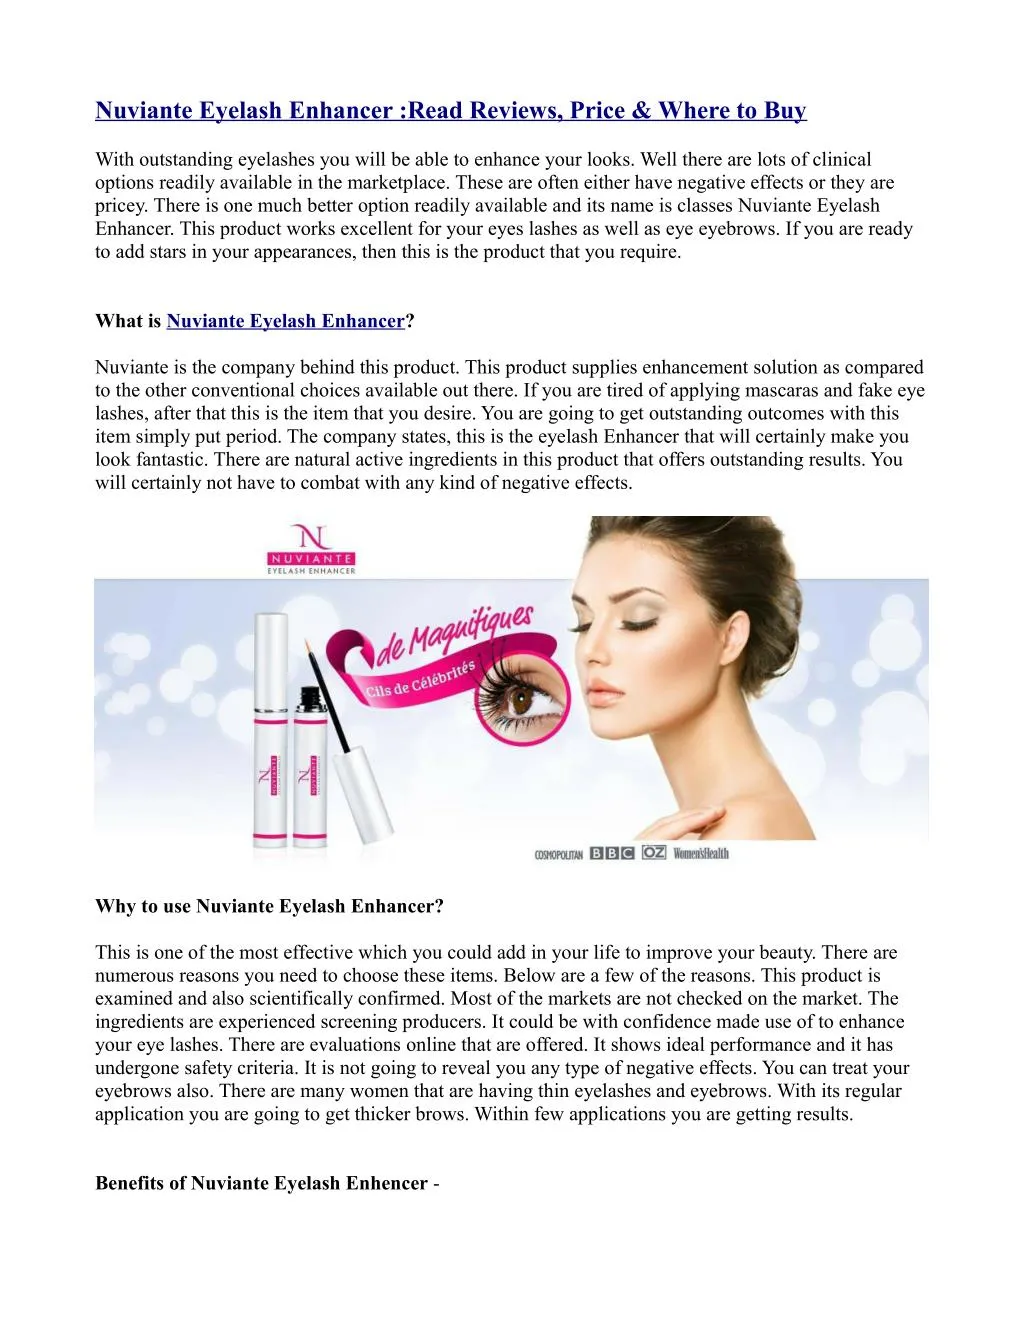 nuviante eyelash enhancer read reviews price